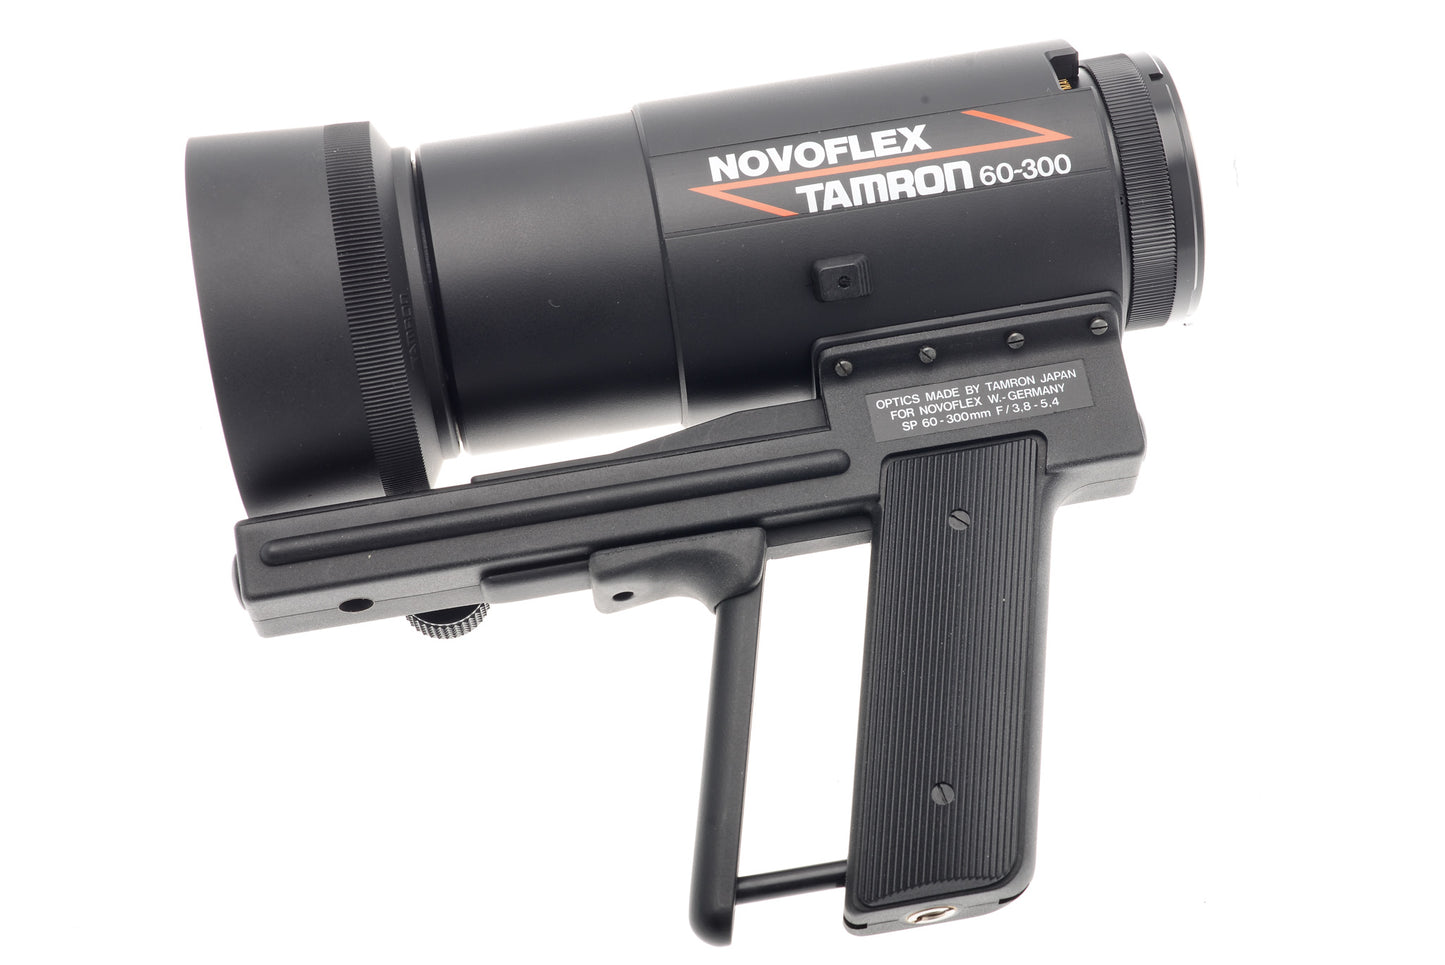 Novoflex Tamron 60-300mm f3.8-5.4 - Lens